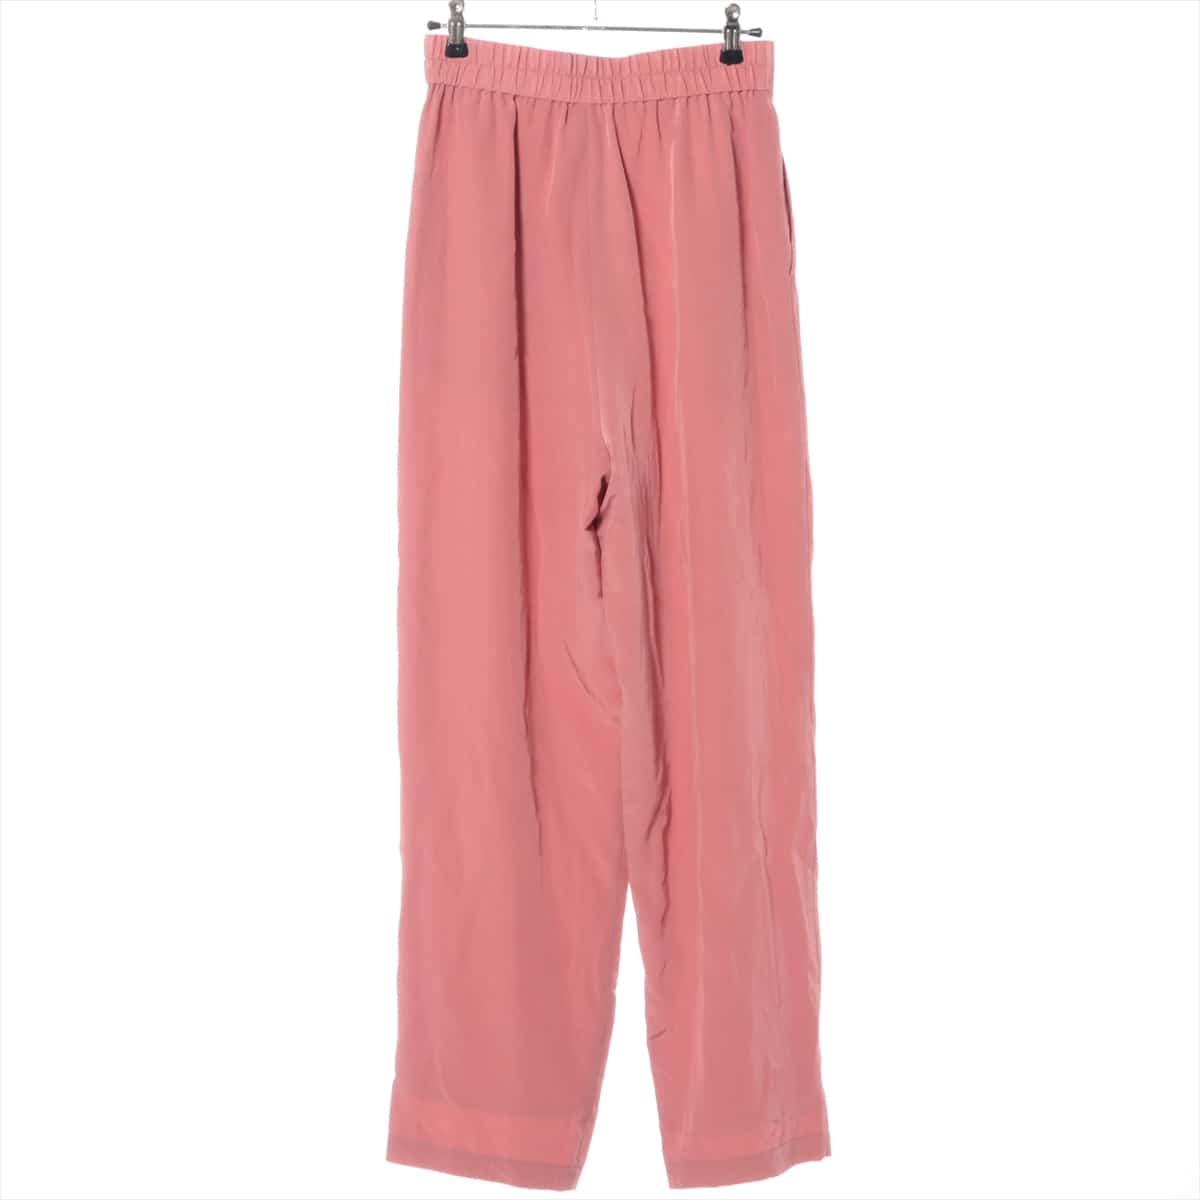 CLANE Polyester × Rayon Slacks Ladies' Pale Pink